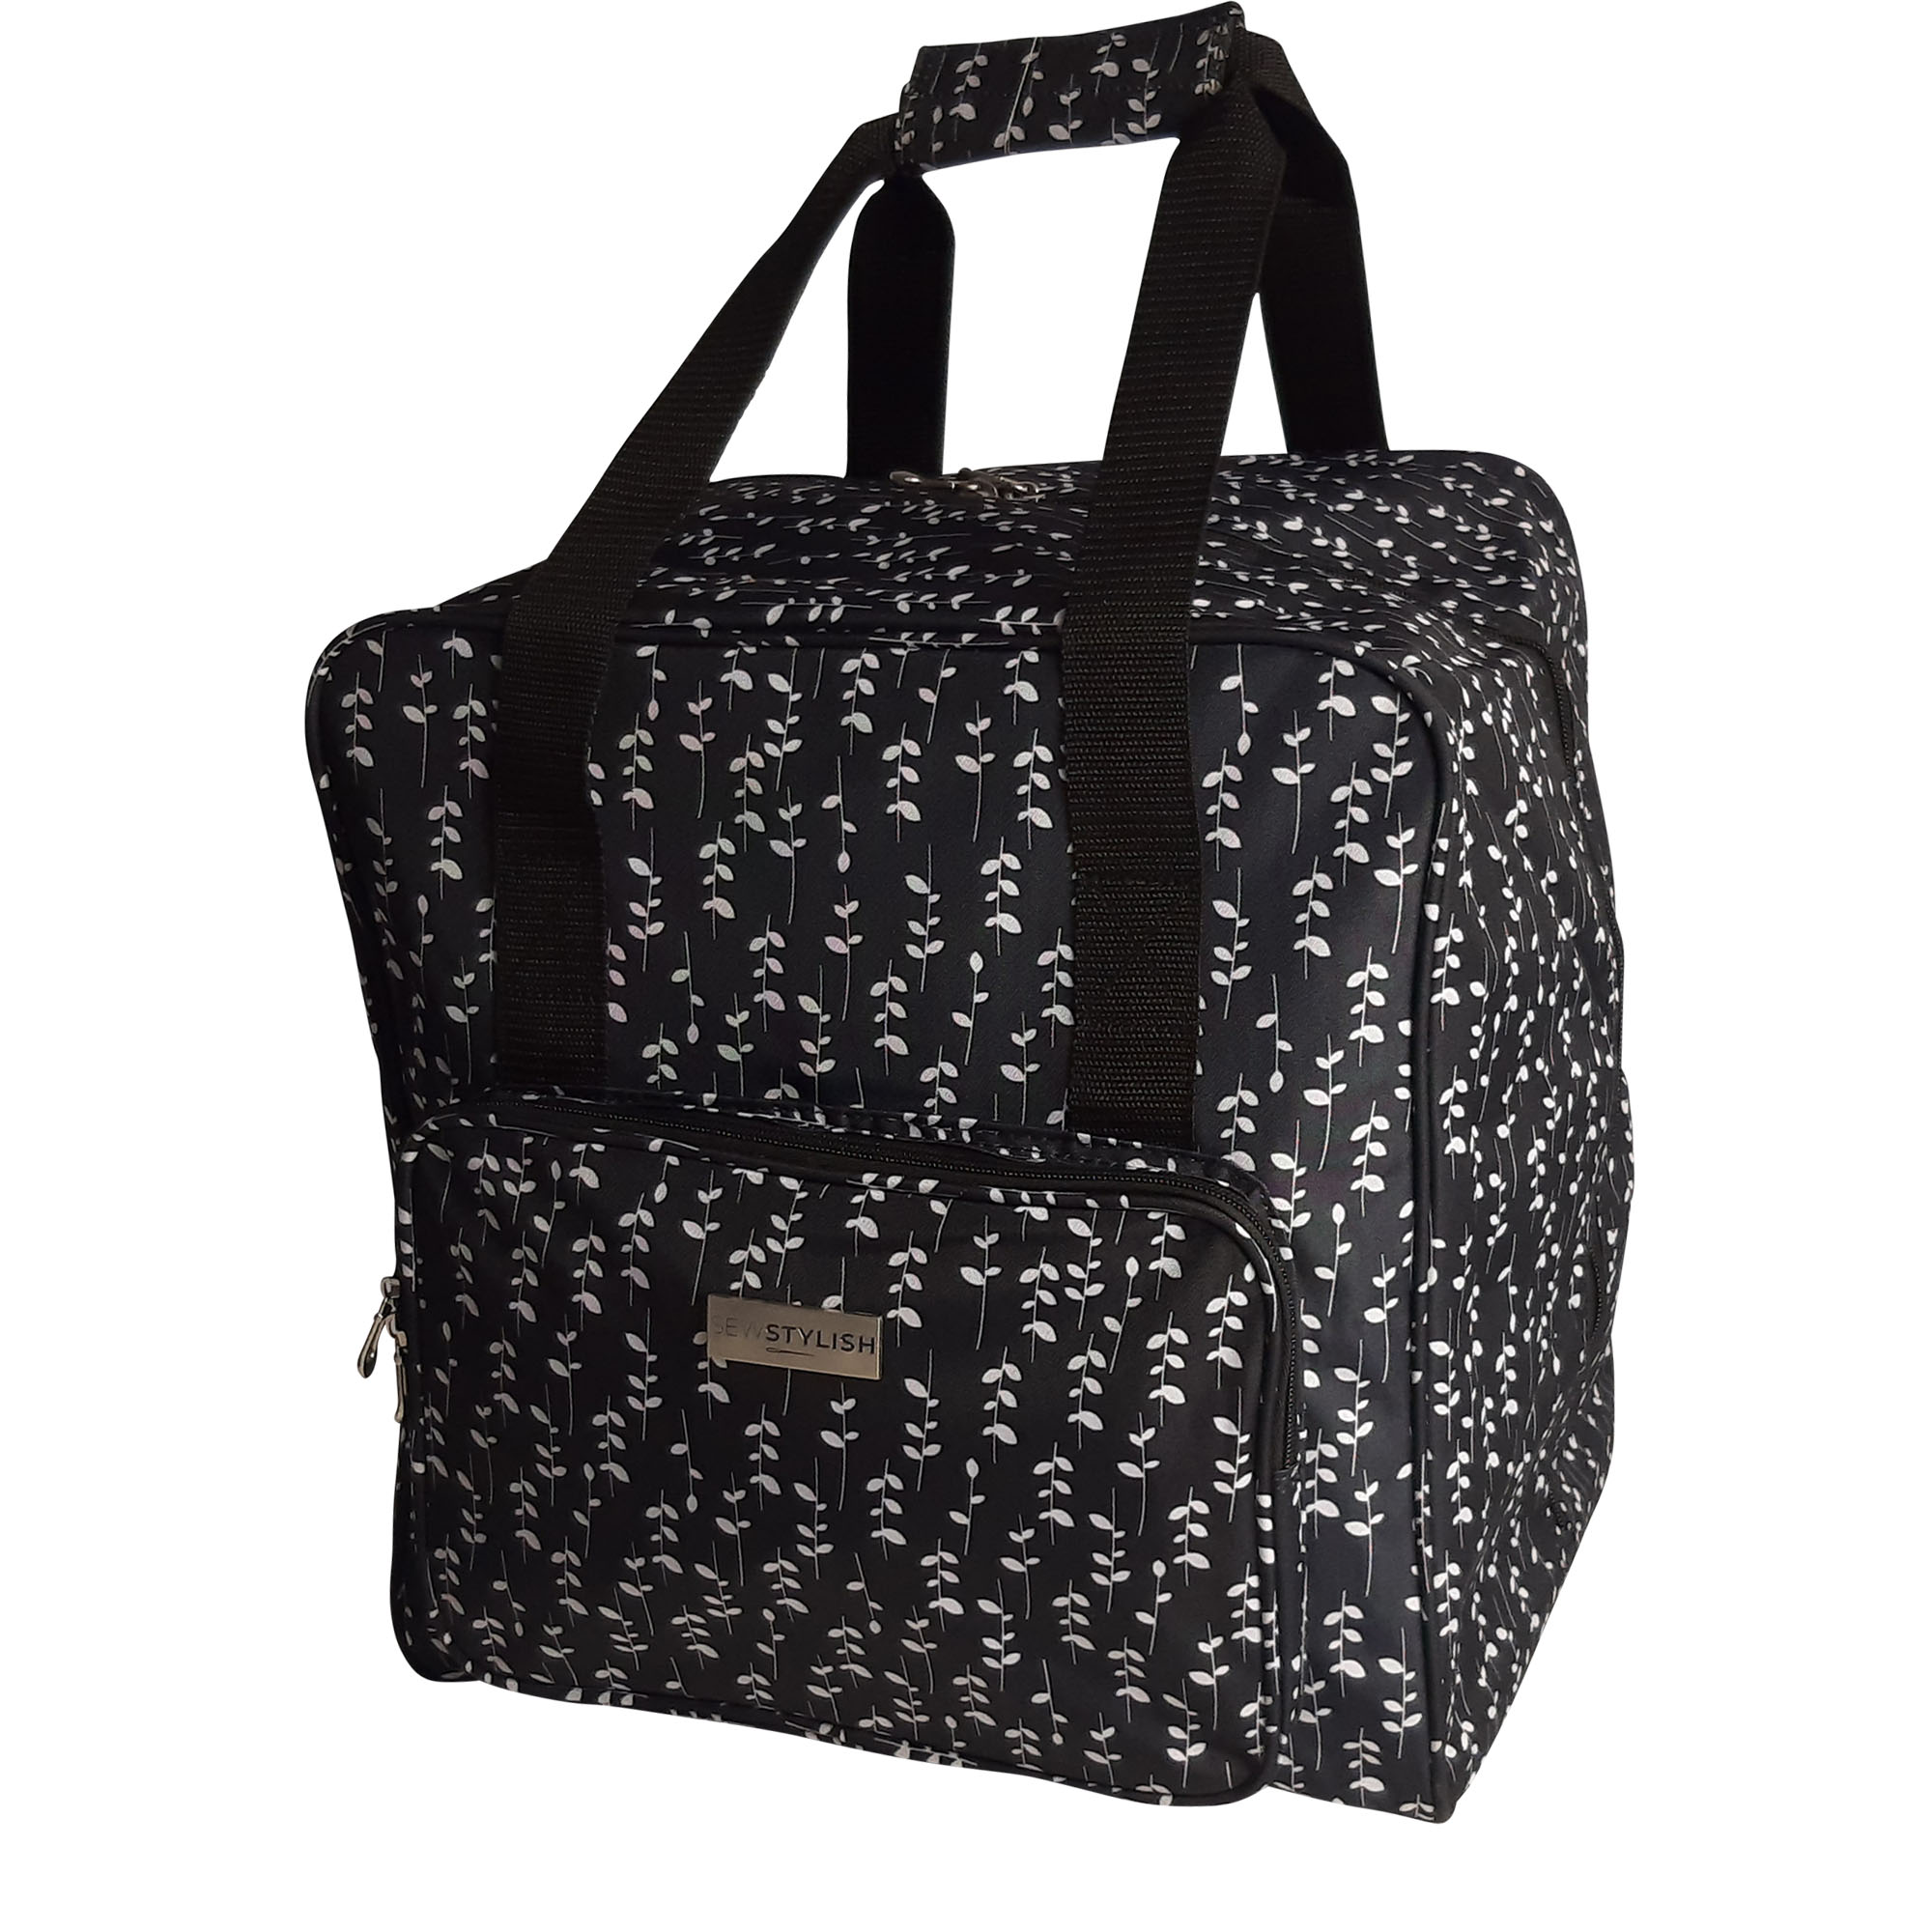 Image of: Overlocker Bag Black Sprig 38 x 35.5 x 33 cm | Sew Stylish PT650-BLK-SPRIG